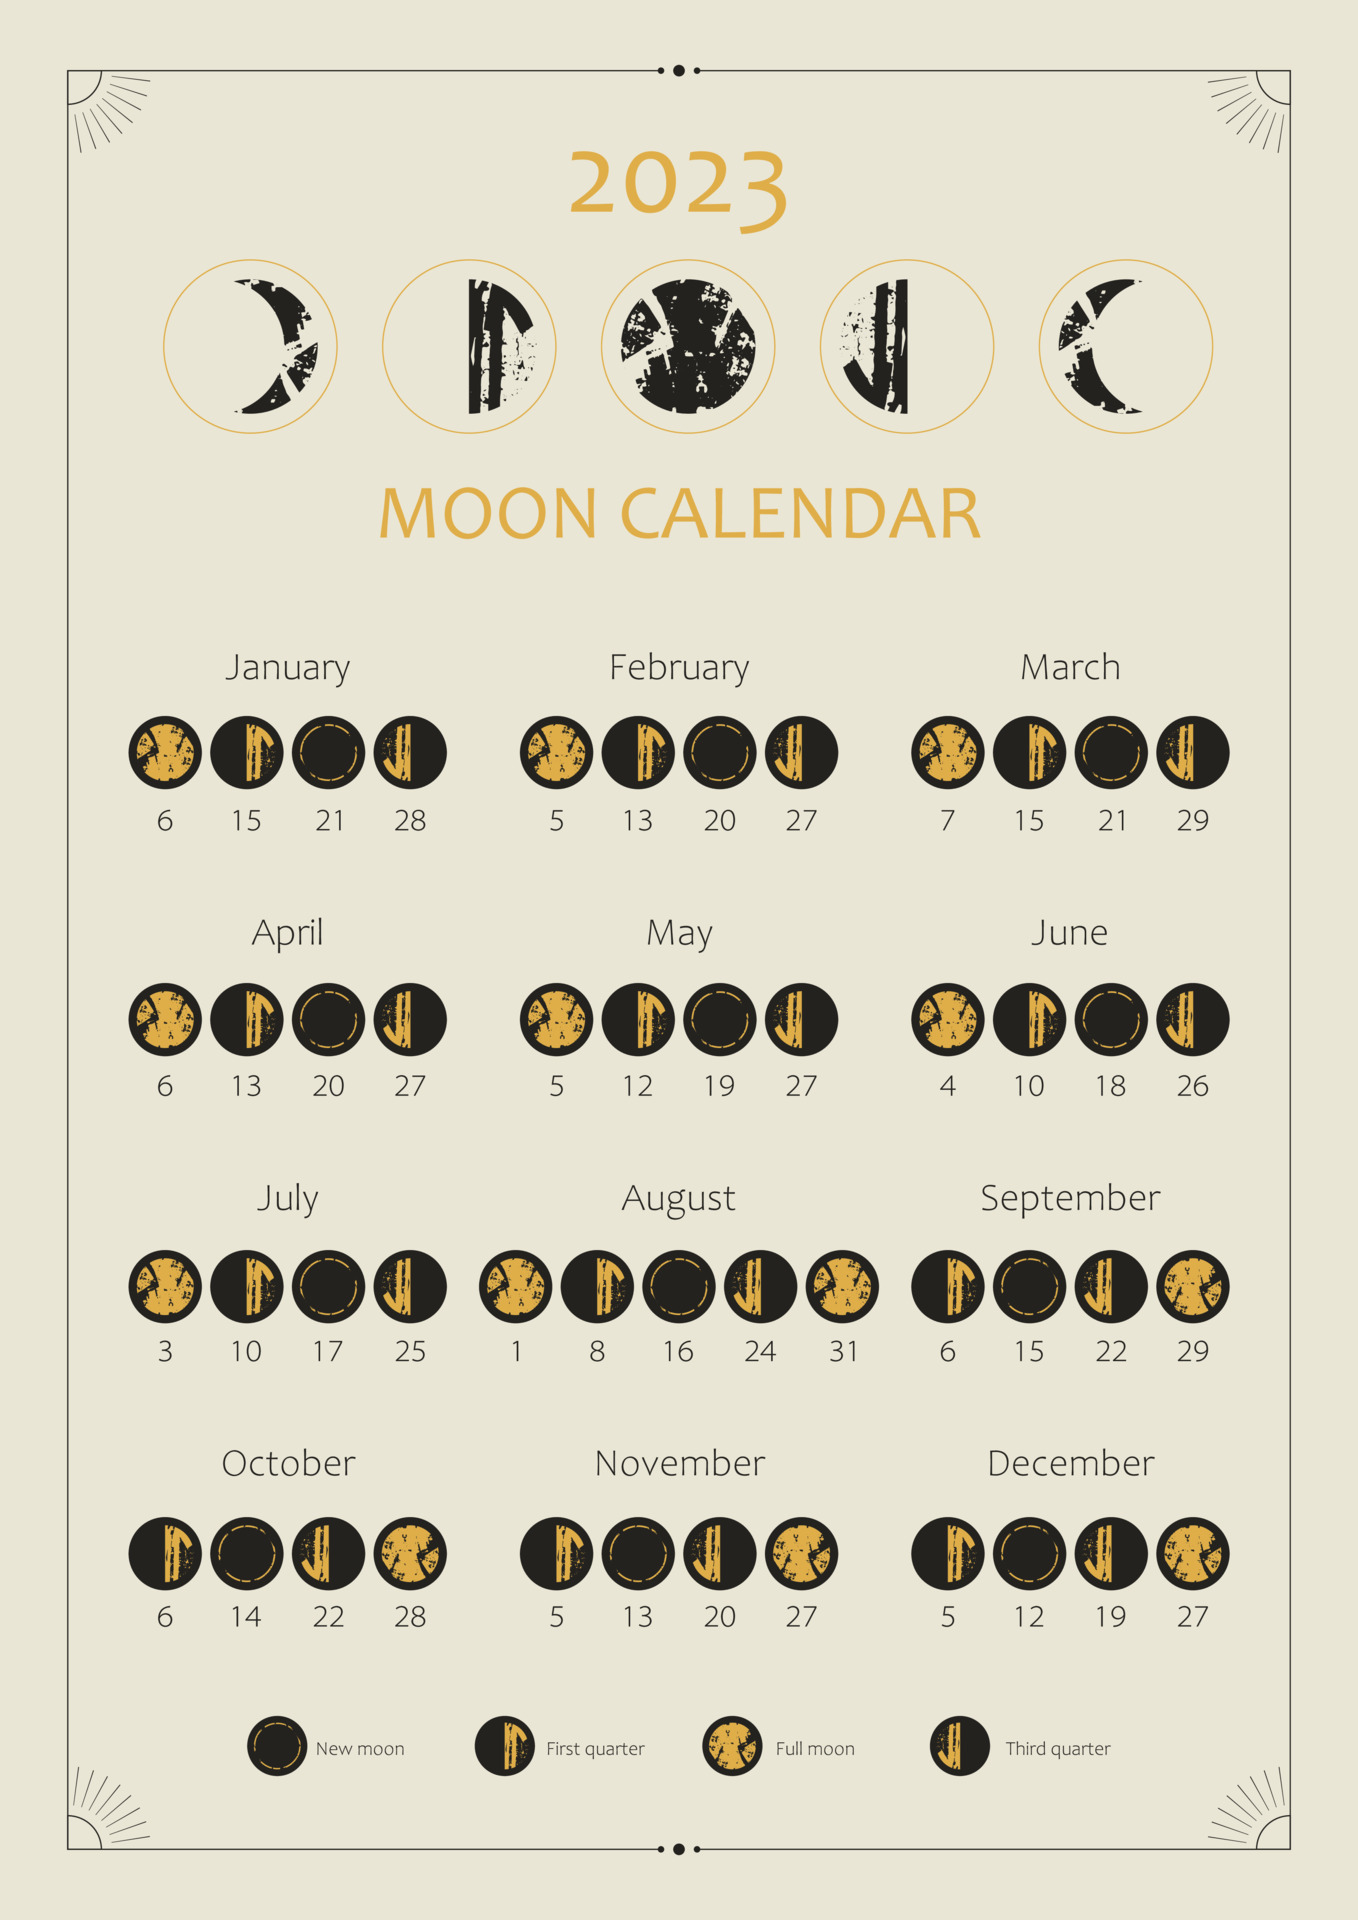 2023 Moon calendar. Astrological calendar design. Moon phase cycle